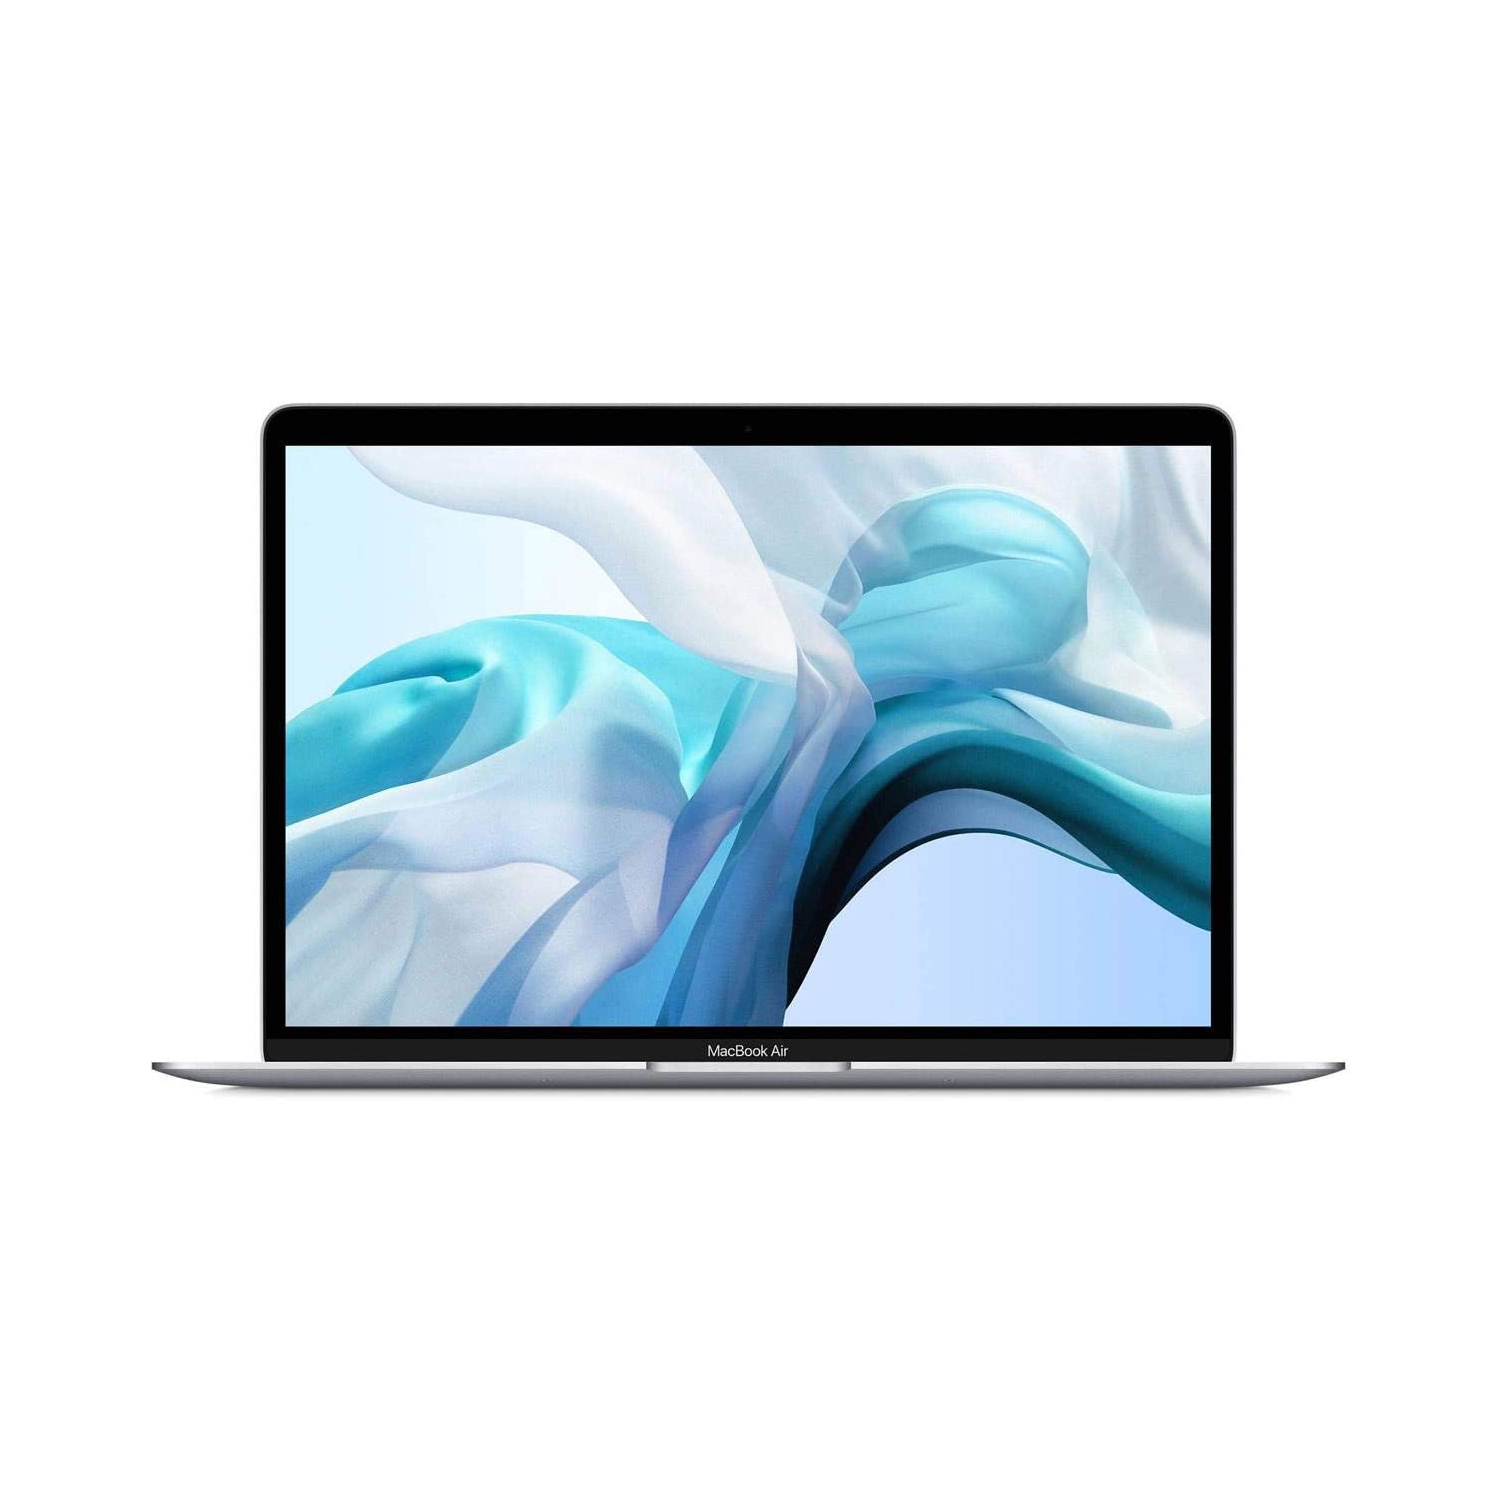 Refurbished (Excellent) - Apple Macbook Air 13.3" (Intel Core i3 / 8GB RAM / 256GB SSD) US QWERTY Keyboard - Mwtj2ll/a Early 2020 - Silver - Certified Refurbished